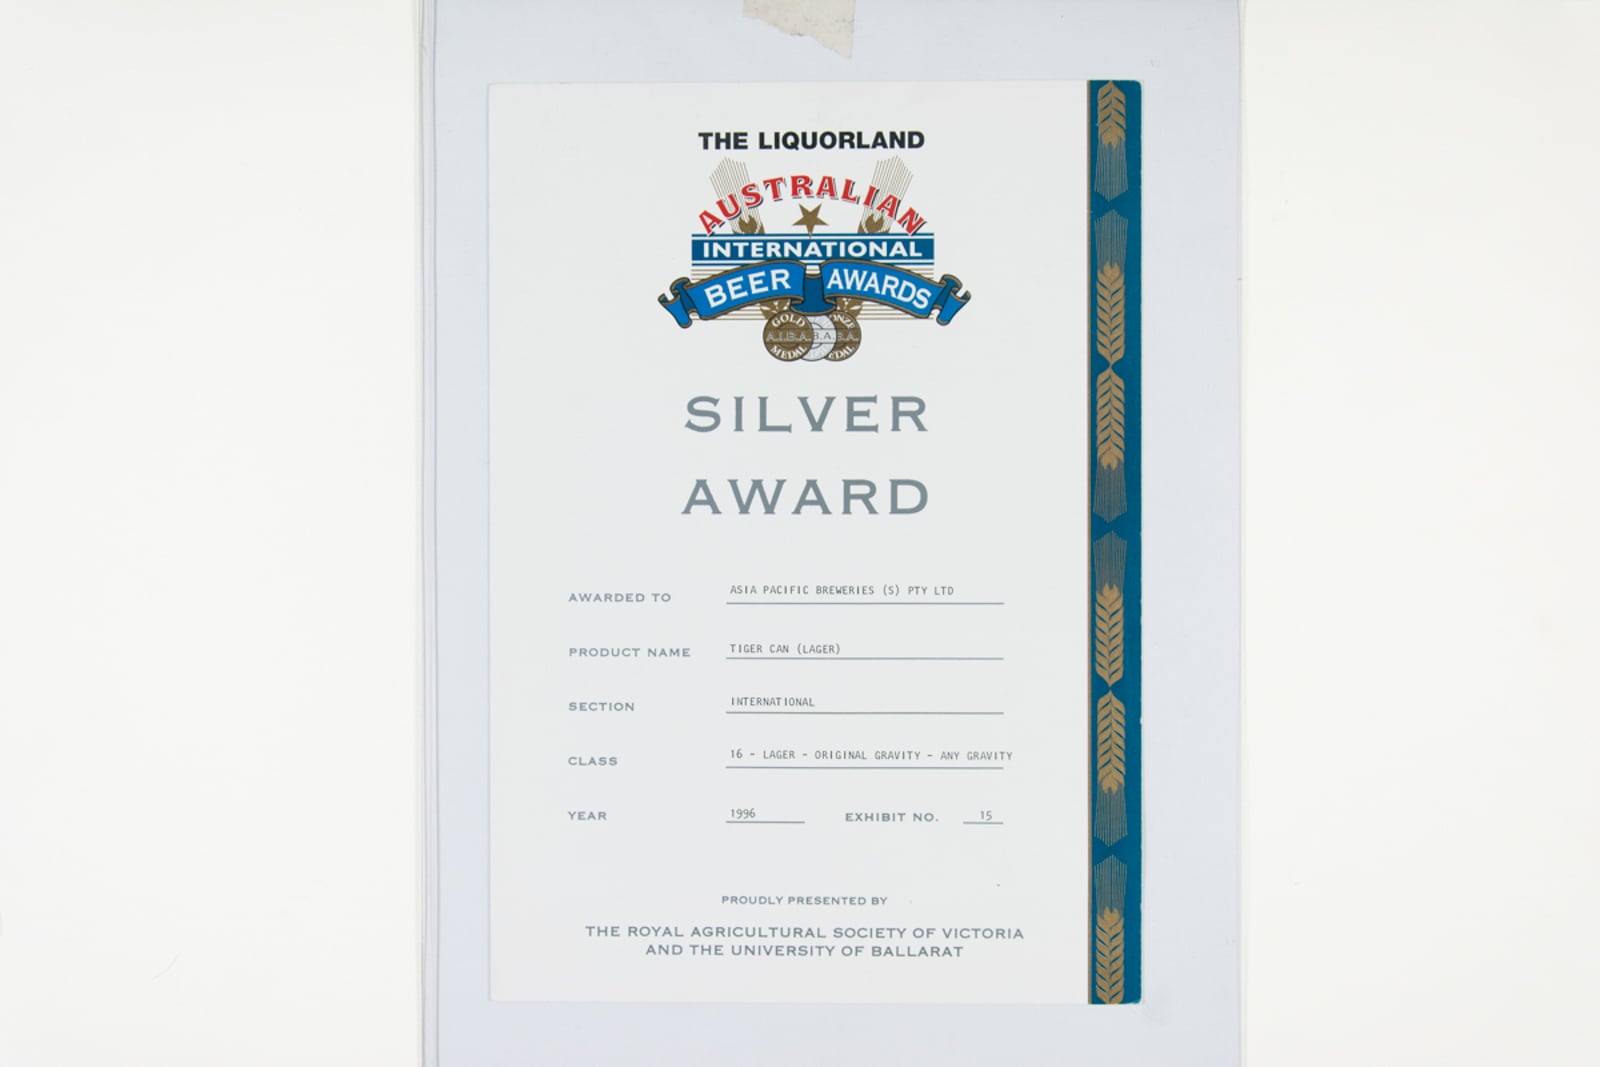 Tiger Can (Lager) Silver Award, Australian International Beer Awards Certificate 1996